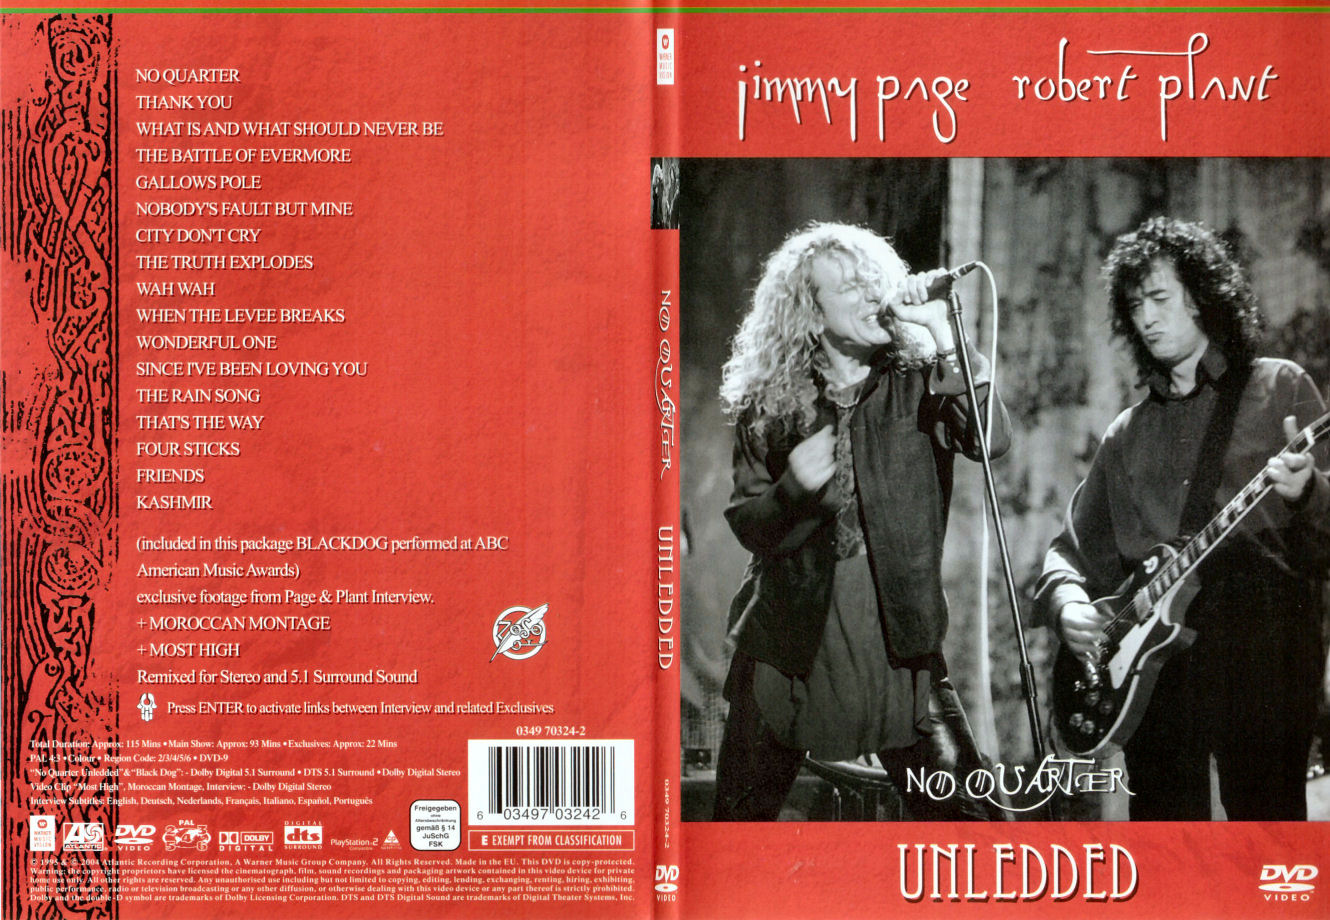 Jaquette DVD No quarter Unledded (Jimmy Page - Robert Plant) - SLIM